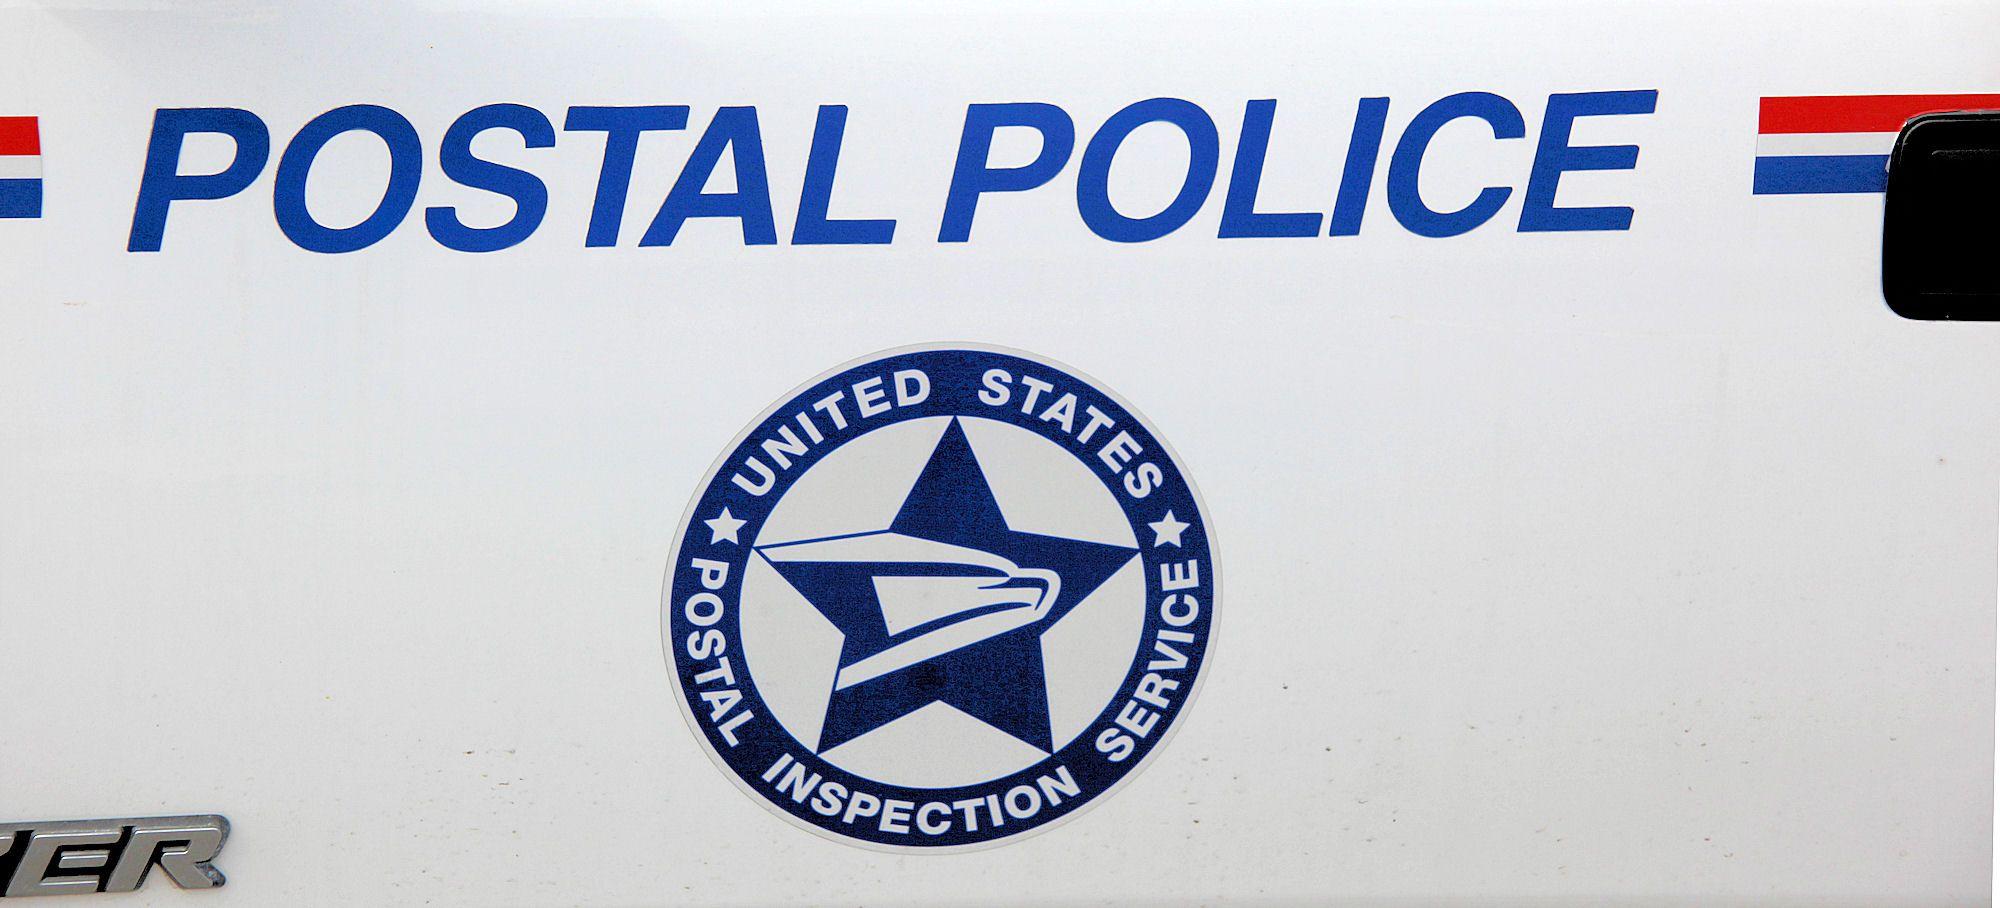 Us Postal Service Logo - File:United States Postal Inspection Service - vehicle logo.JPG ...